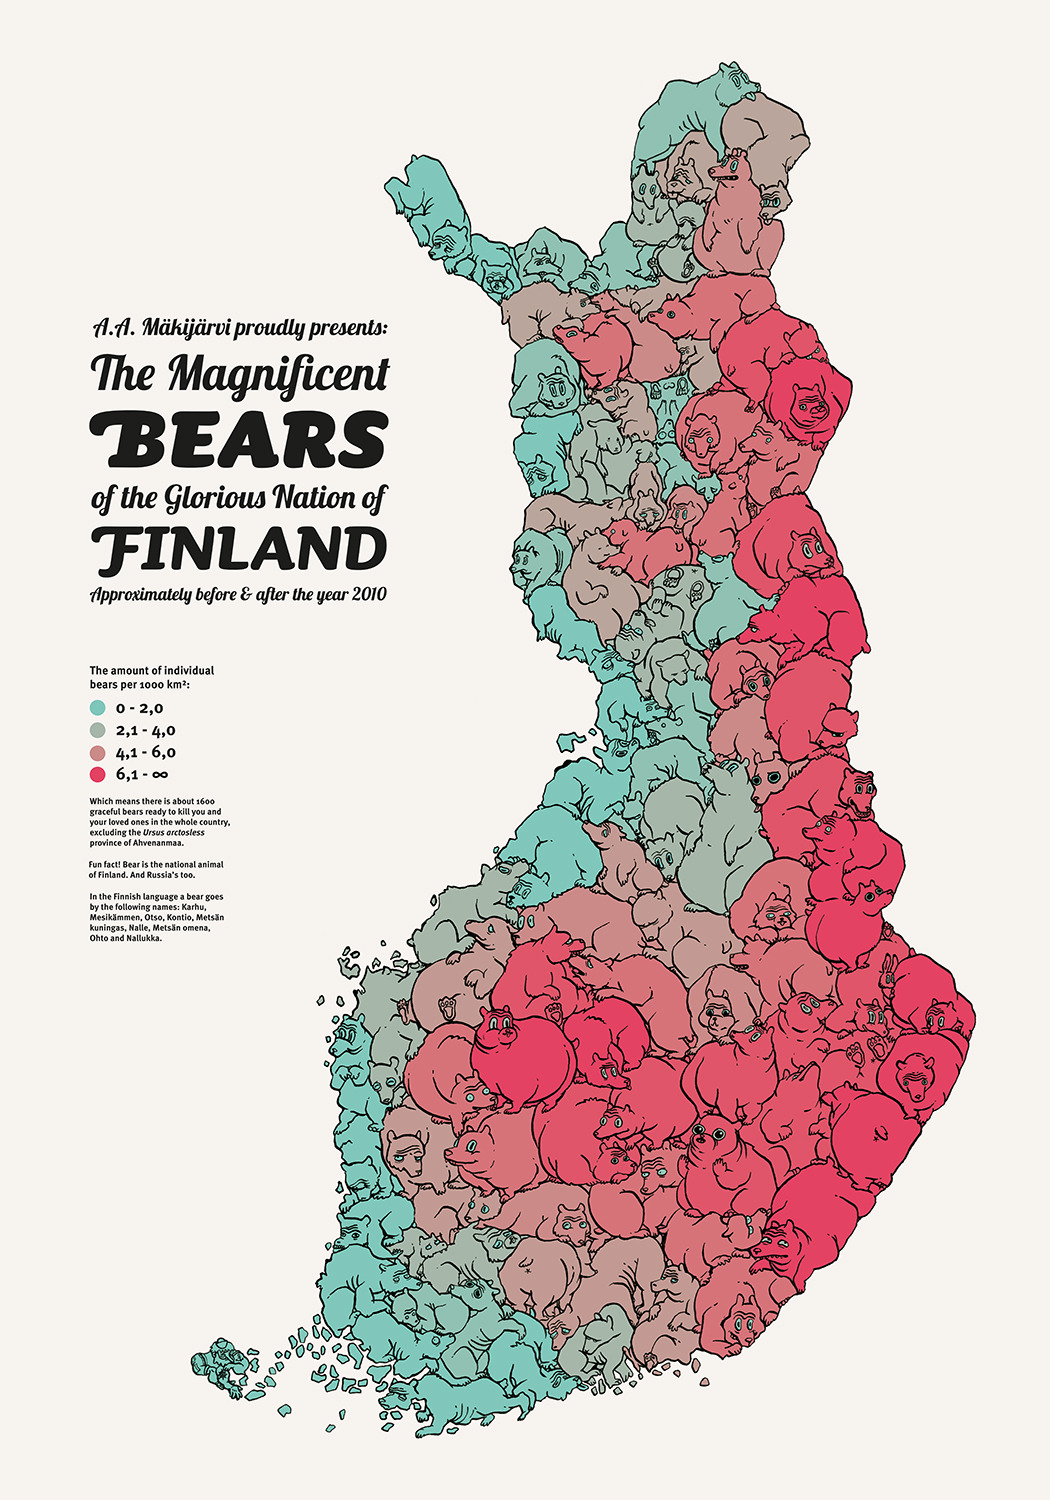 makijarvi: A. A. Mäkijärvi proudly presents: The Magnificent Bears of the Glorious